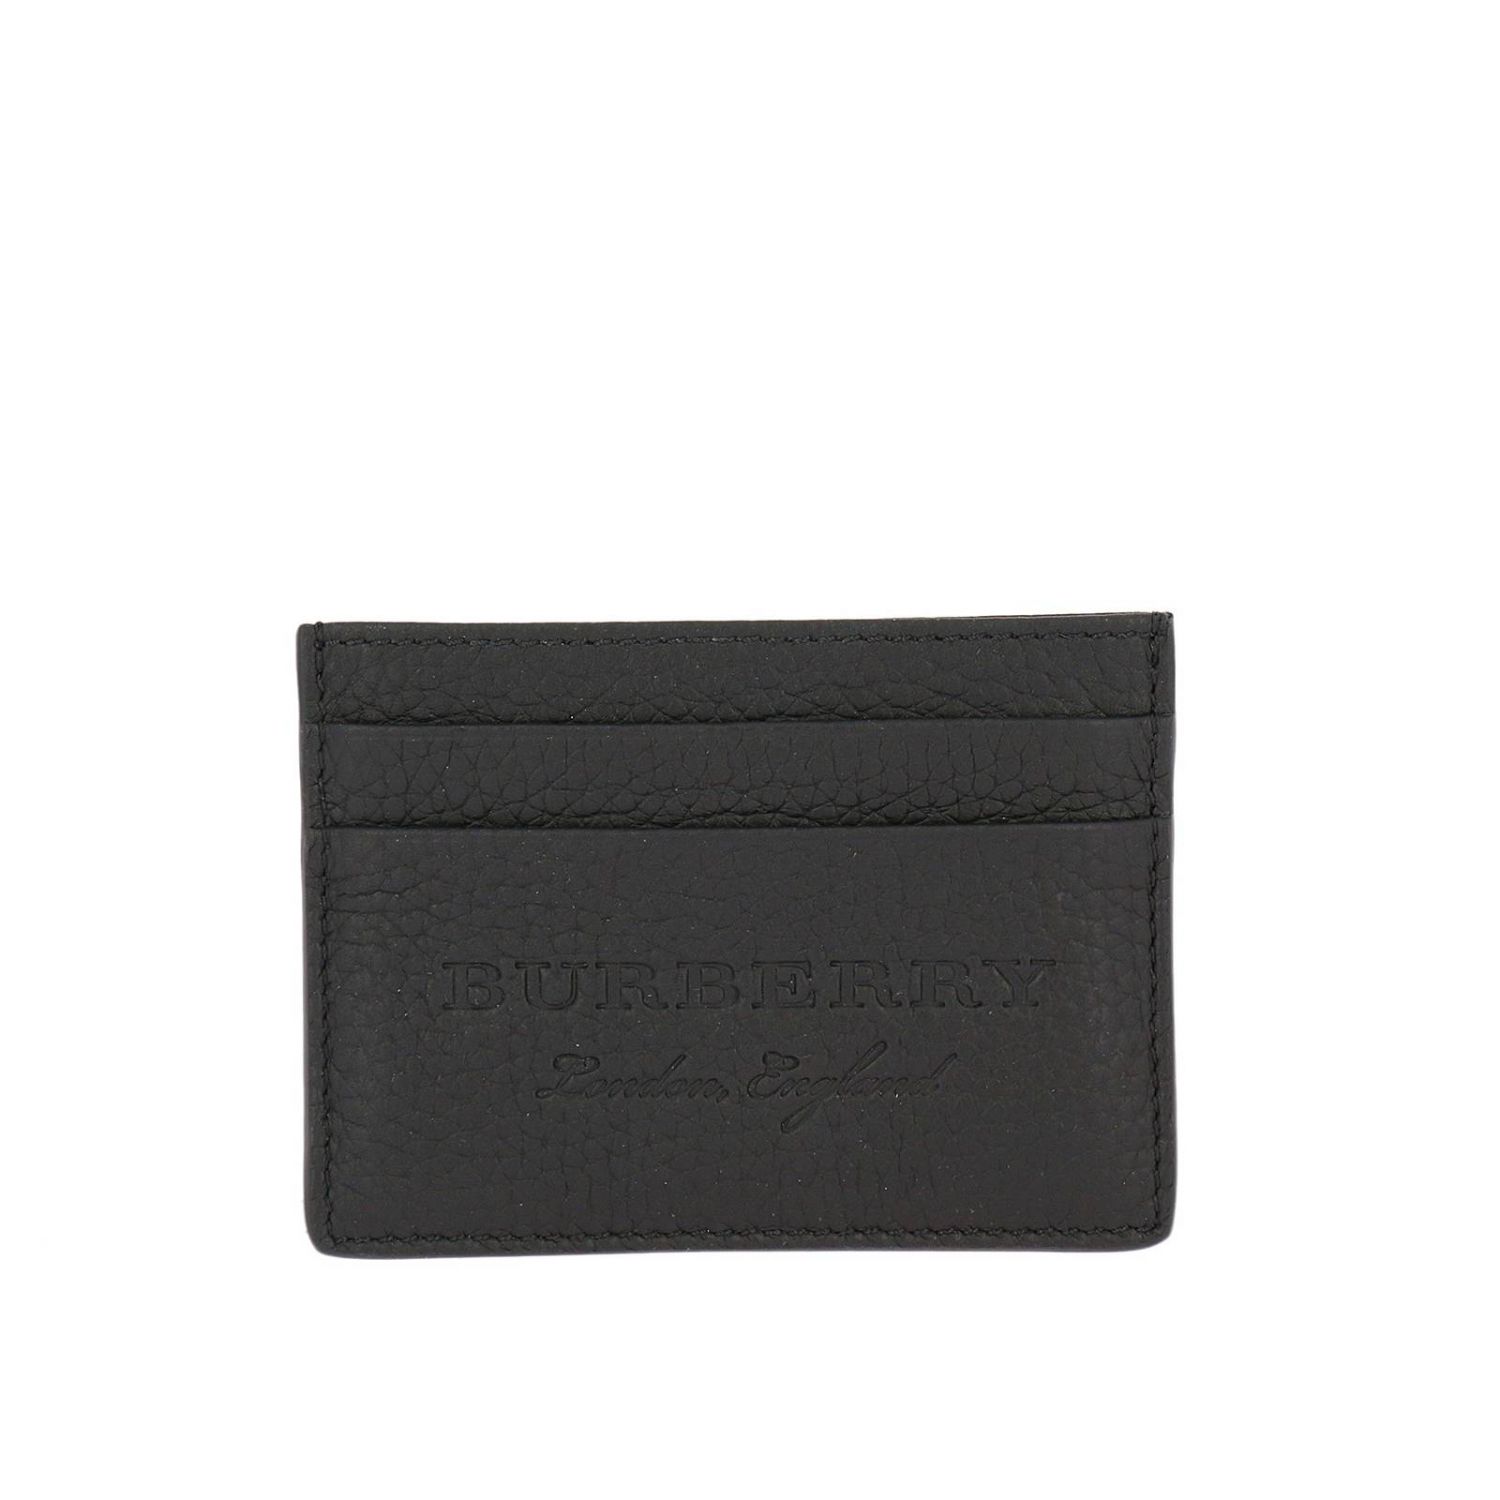 Burberry Outlet: Wallet men - Black | Wallet Burberry 4058559 GIGLIO.COM